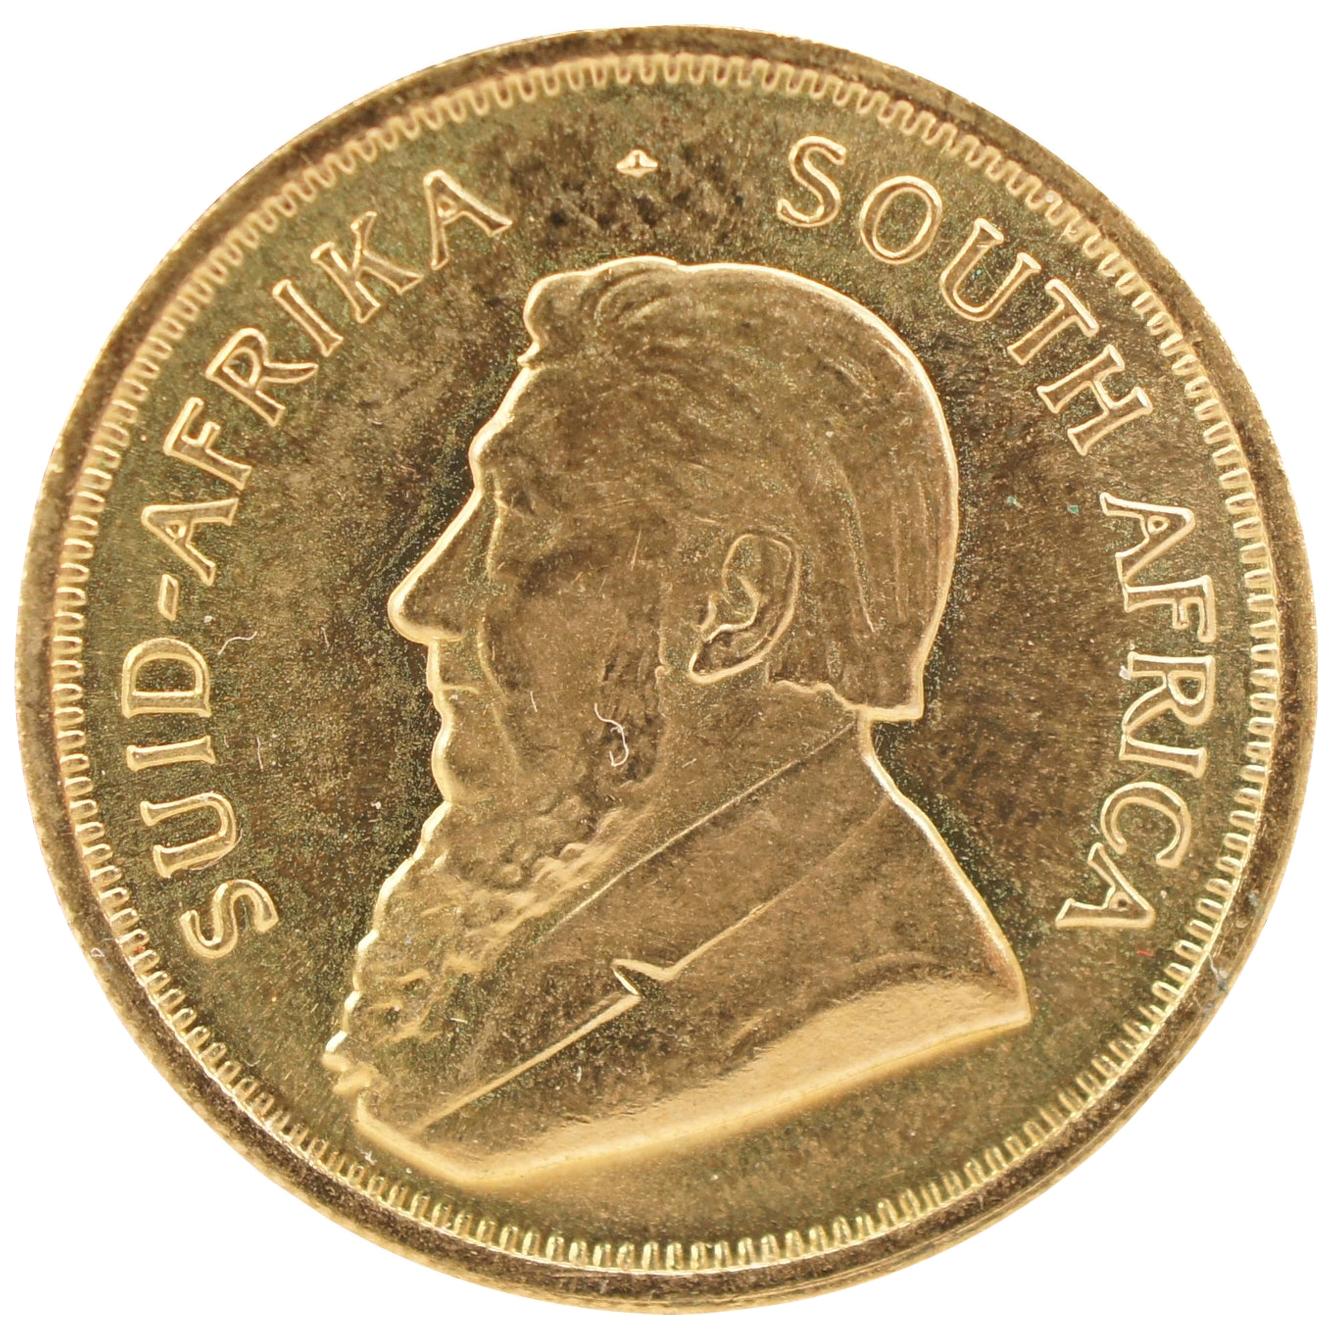 1982 Sud-Afrika South Africa 1/4 Oz Fine Gold Krugerrand Coin Fyngoud Stag 8.5g